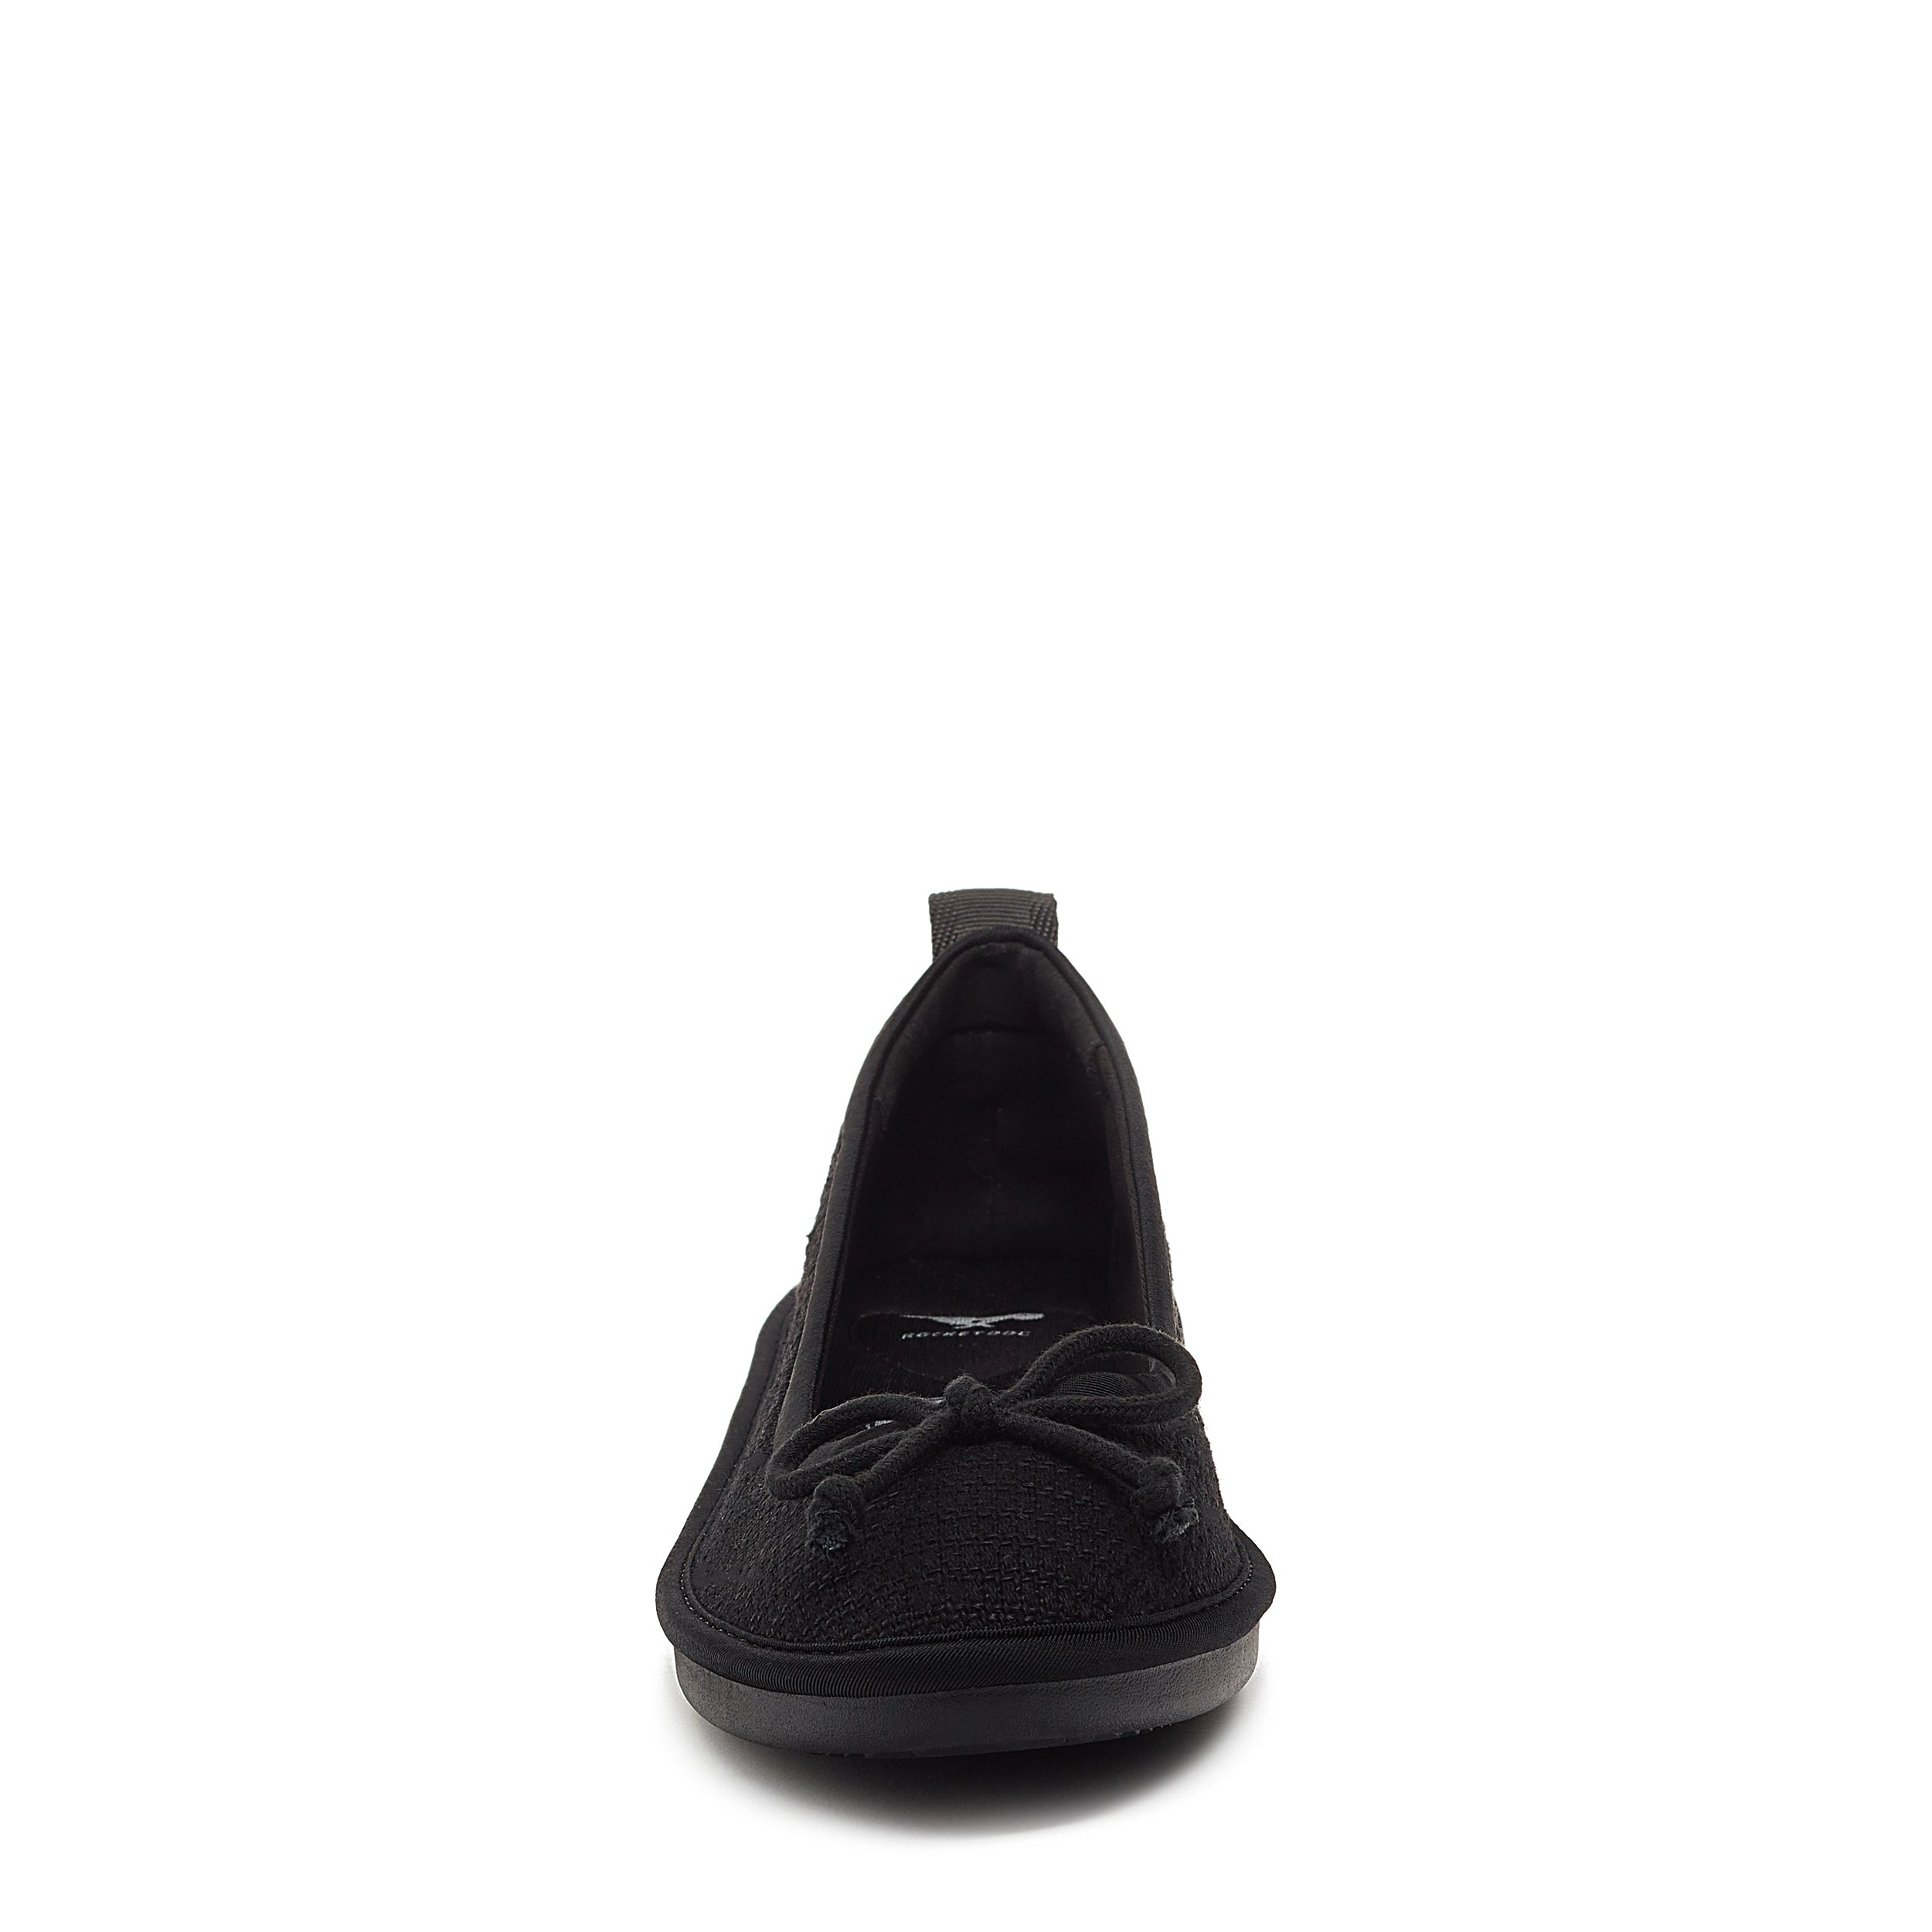 Radha Black Slip-On Casual Flat Shoes – Rocket Dog UK